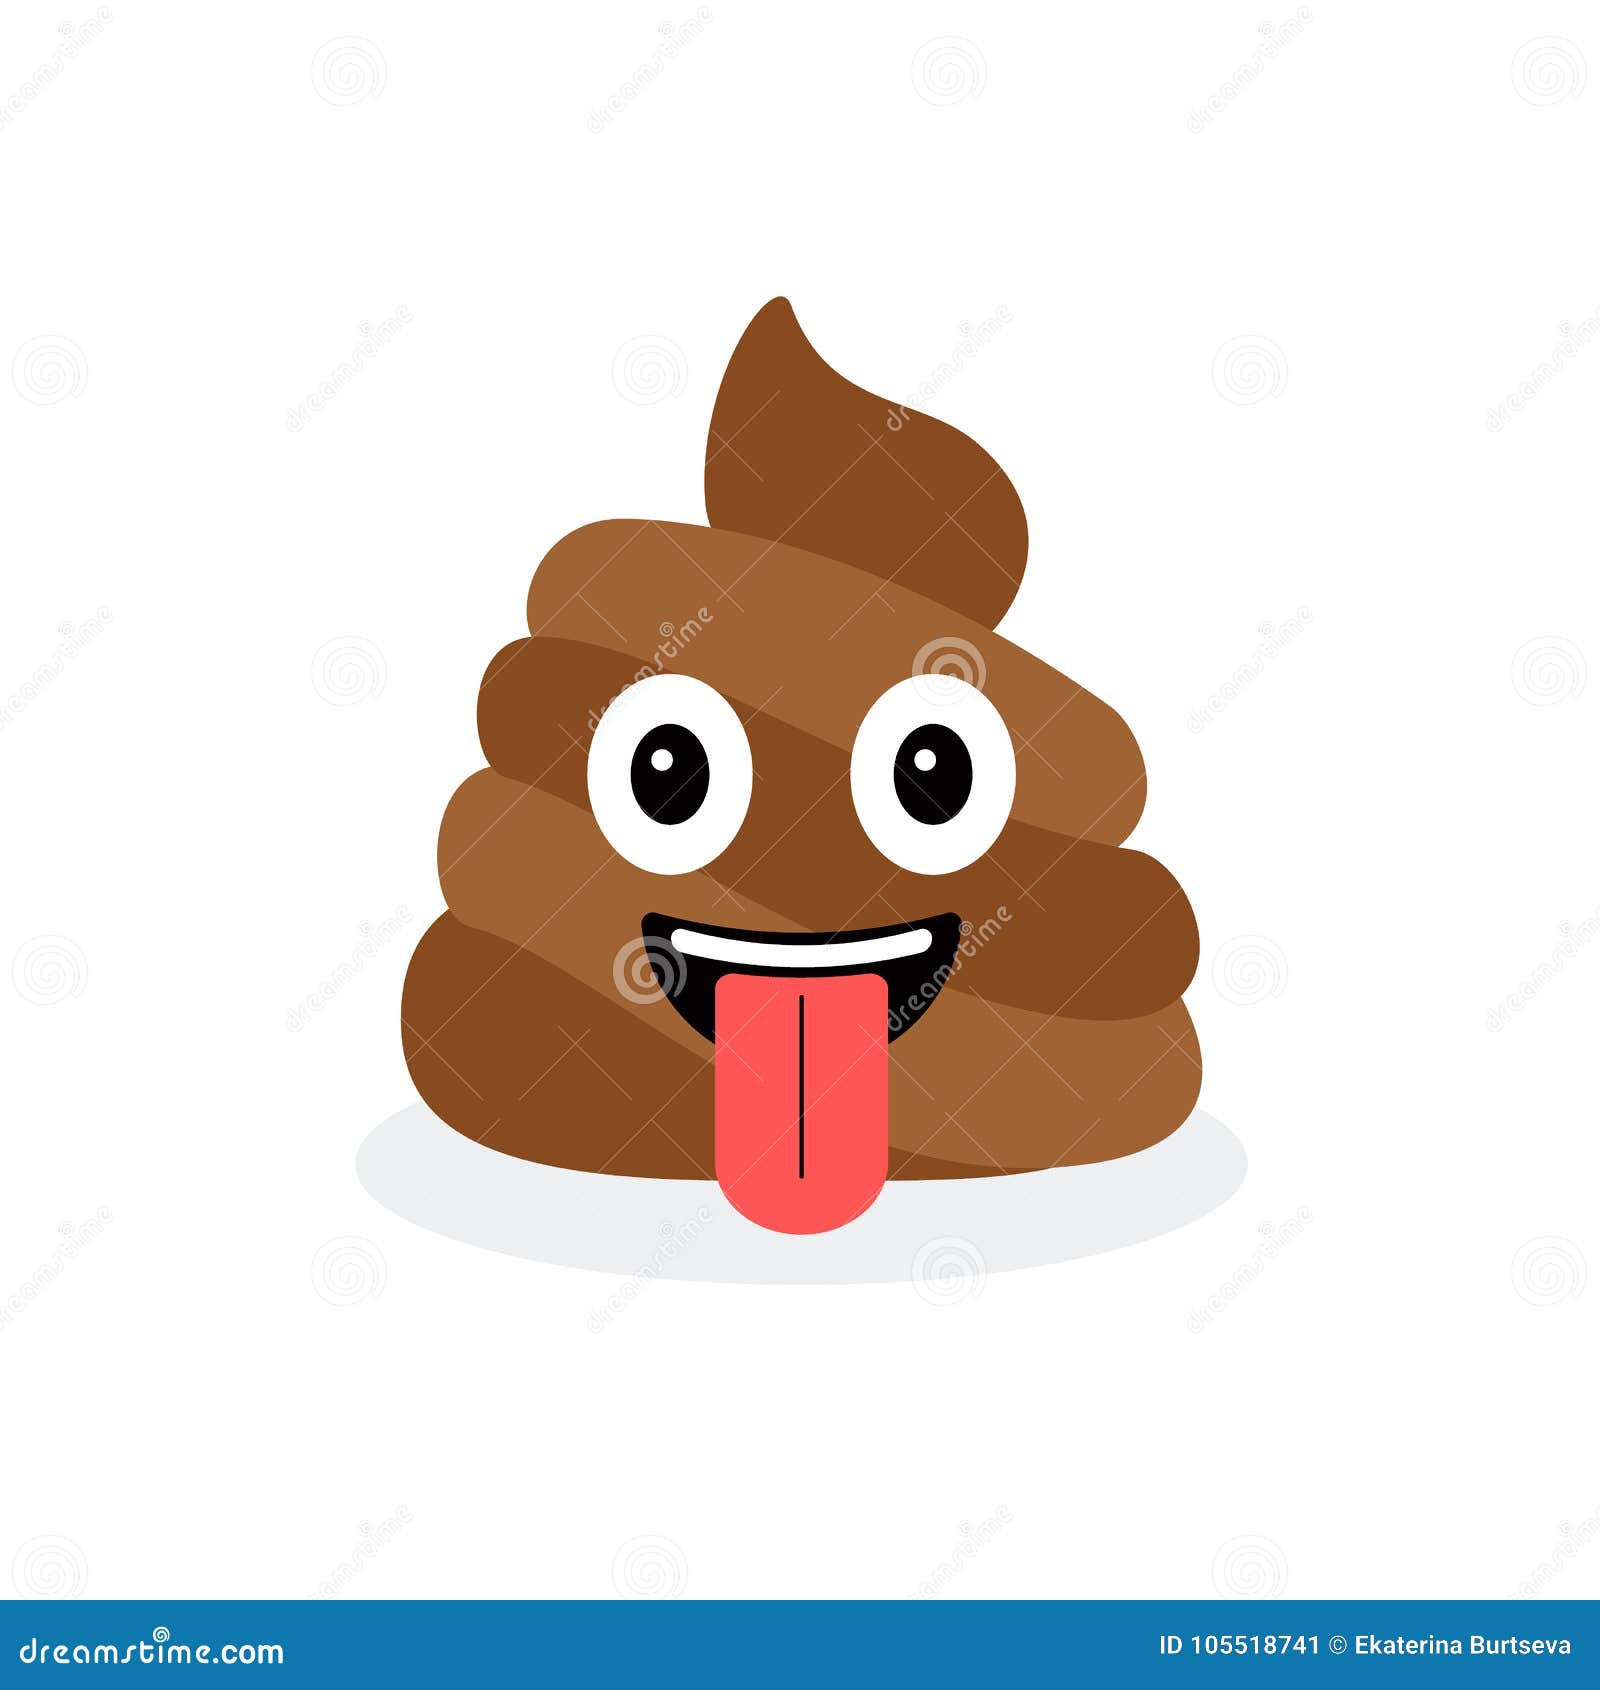 Premium Vector  Illustration of poop emoticon or emoji poop face icon  symbol vector illustration